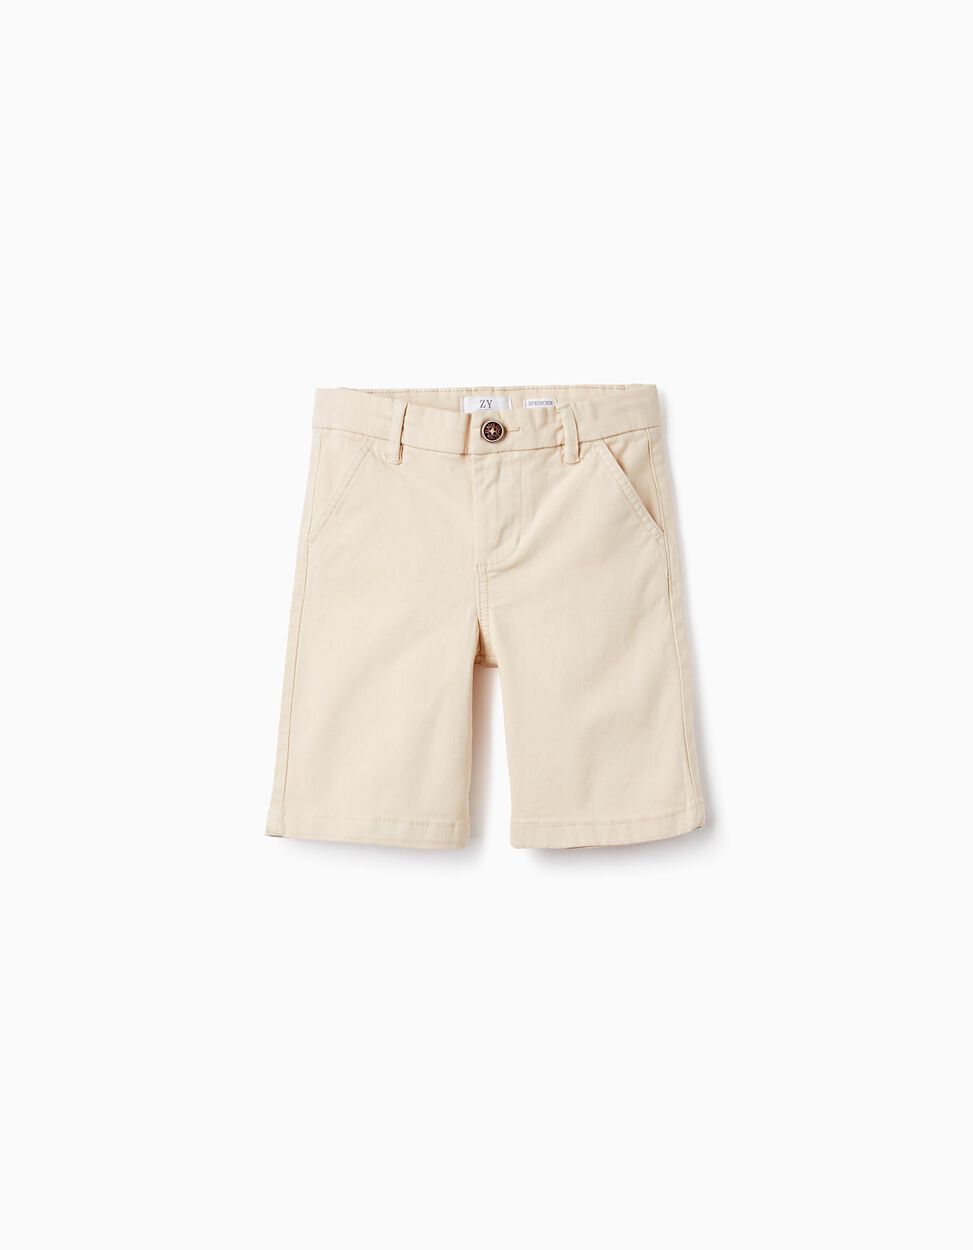 Buy Online Cotton Twill Chino Shorts For Boys 'Midi', Beige